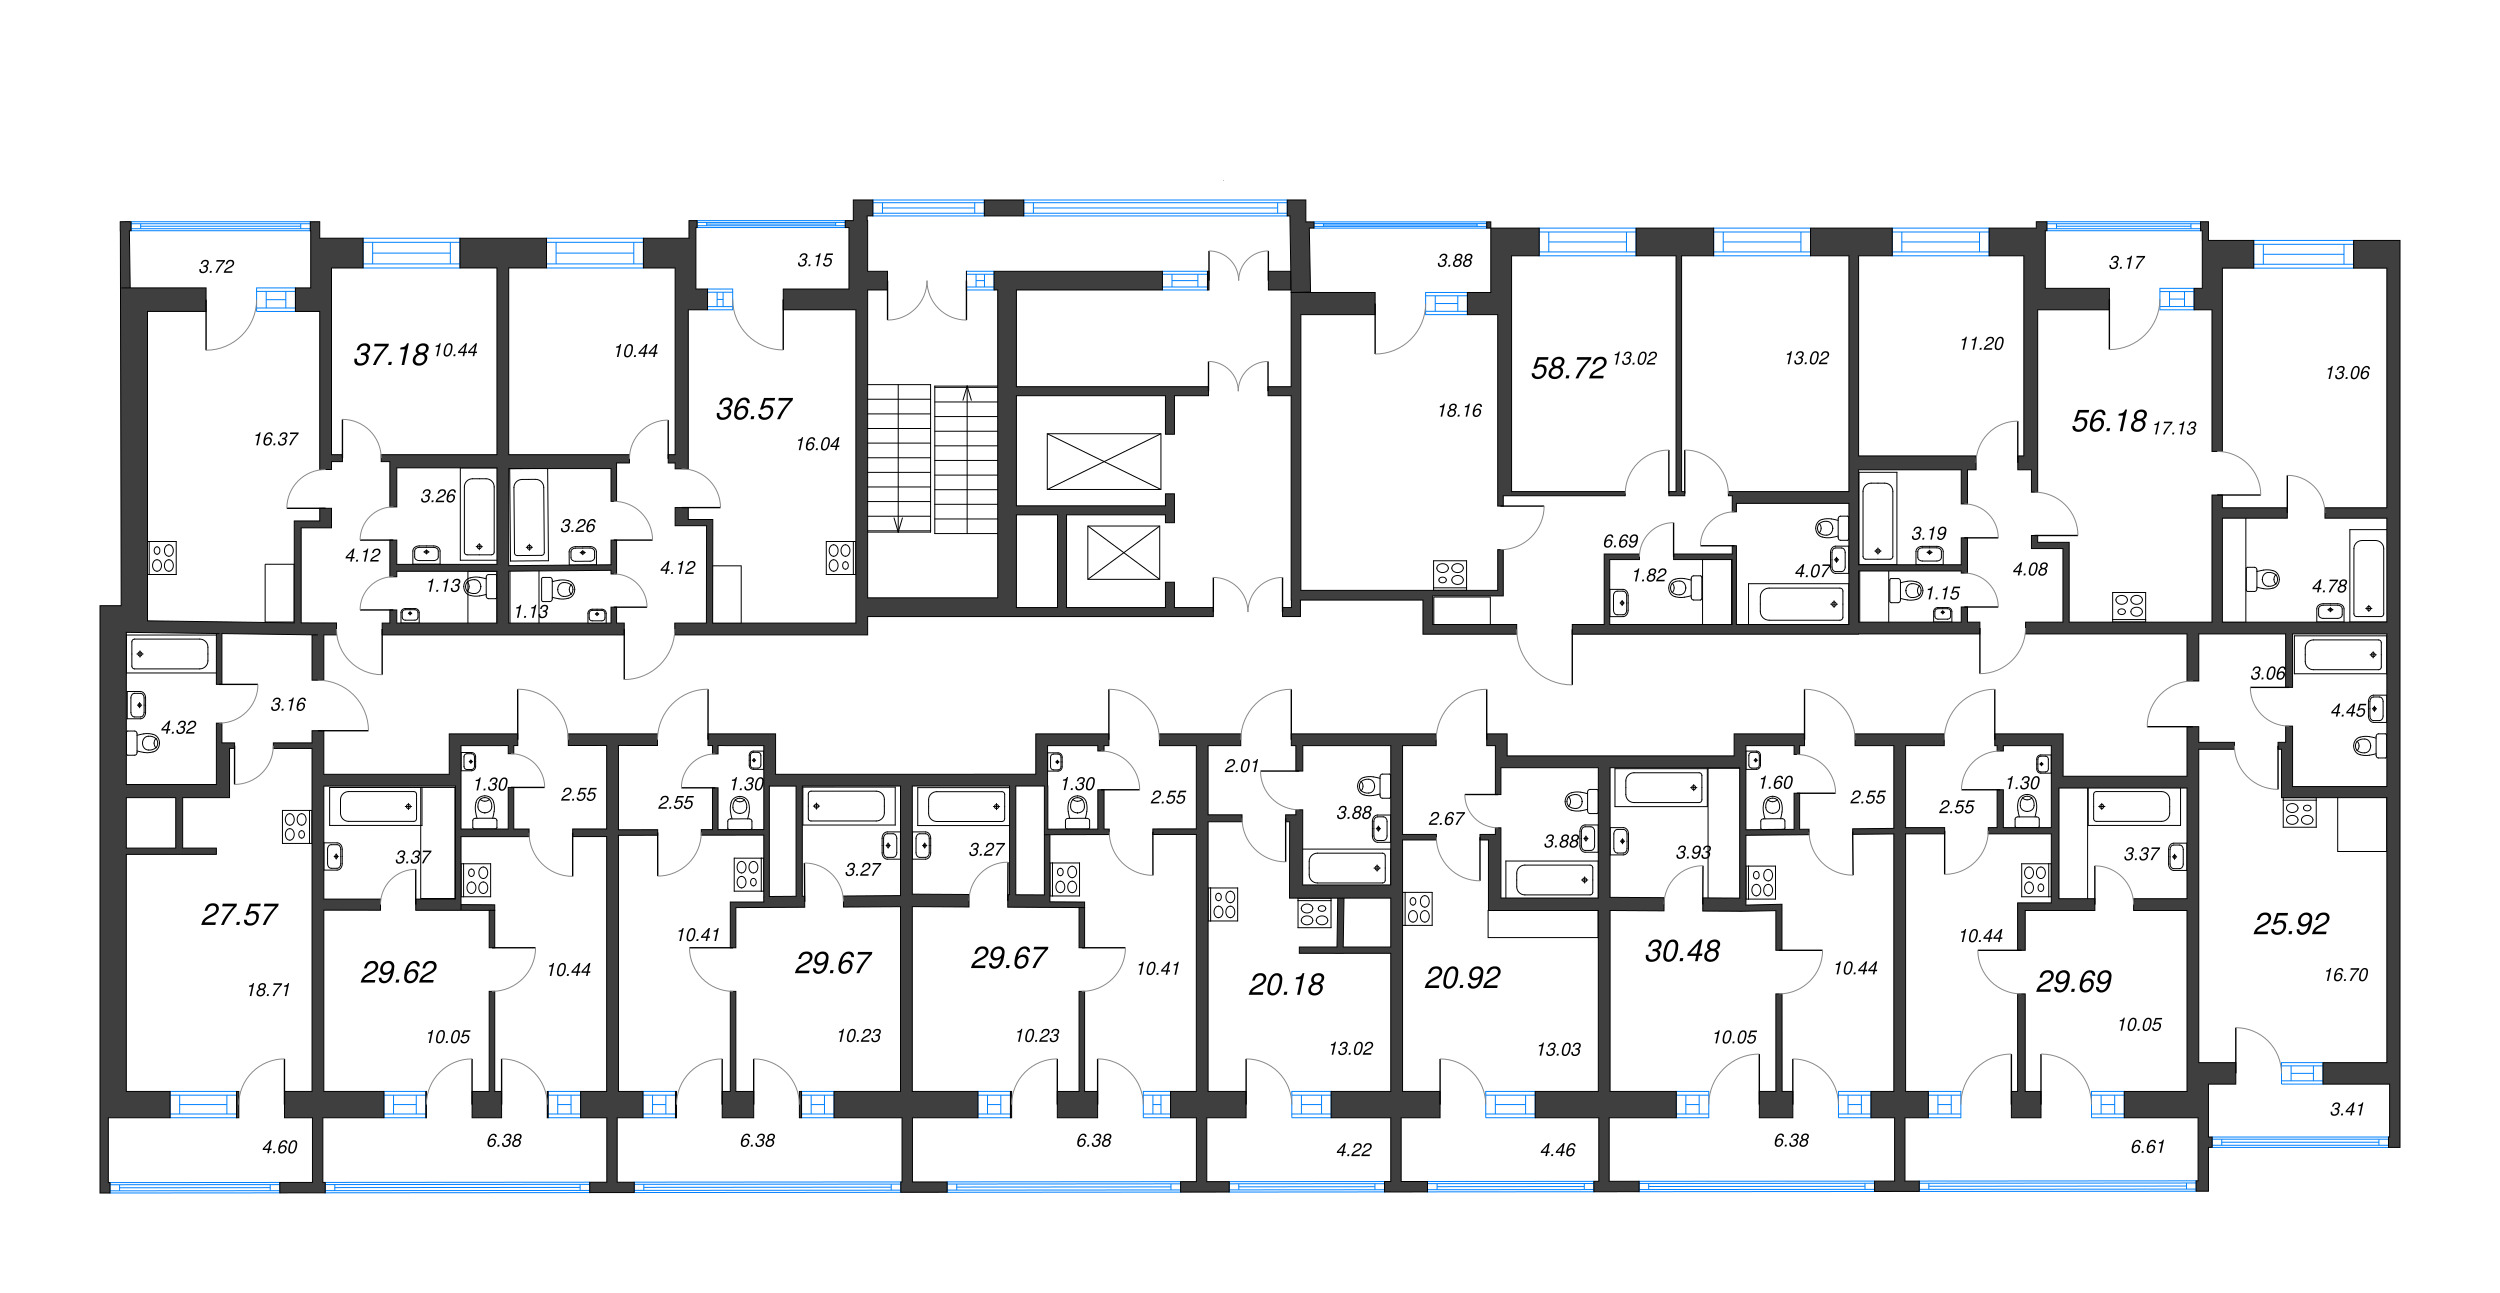 2-комнатная (Евро) квартира, 37.18 м² - планировка этажа